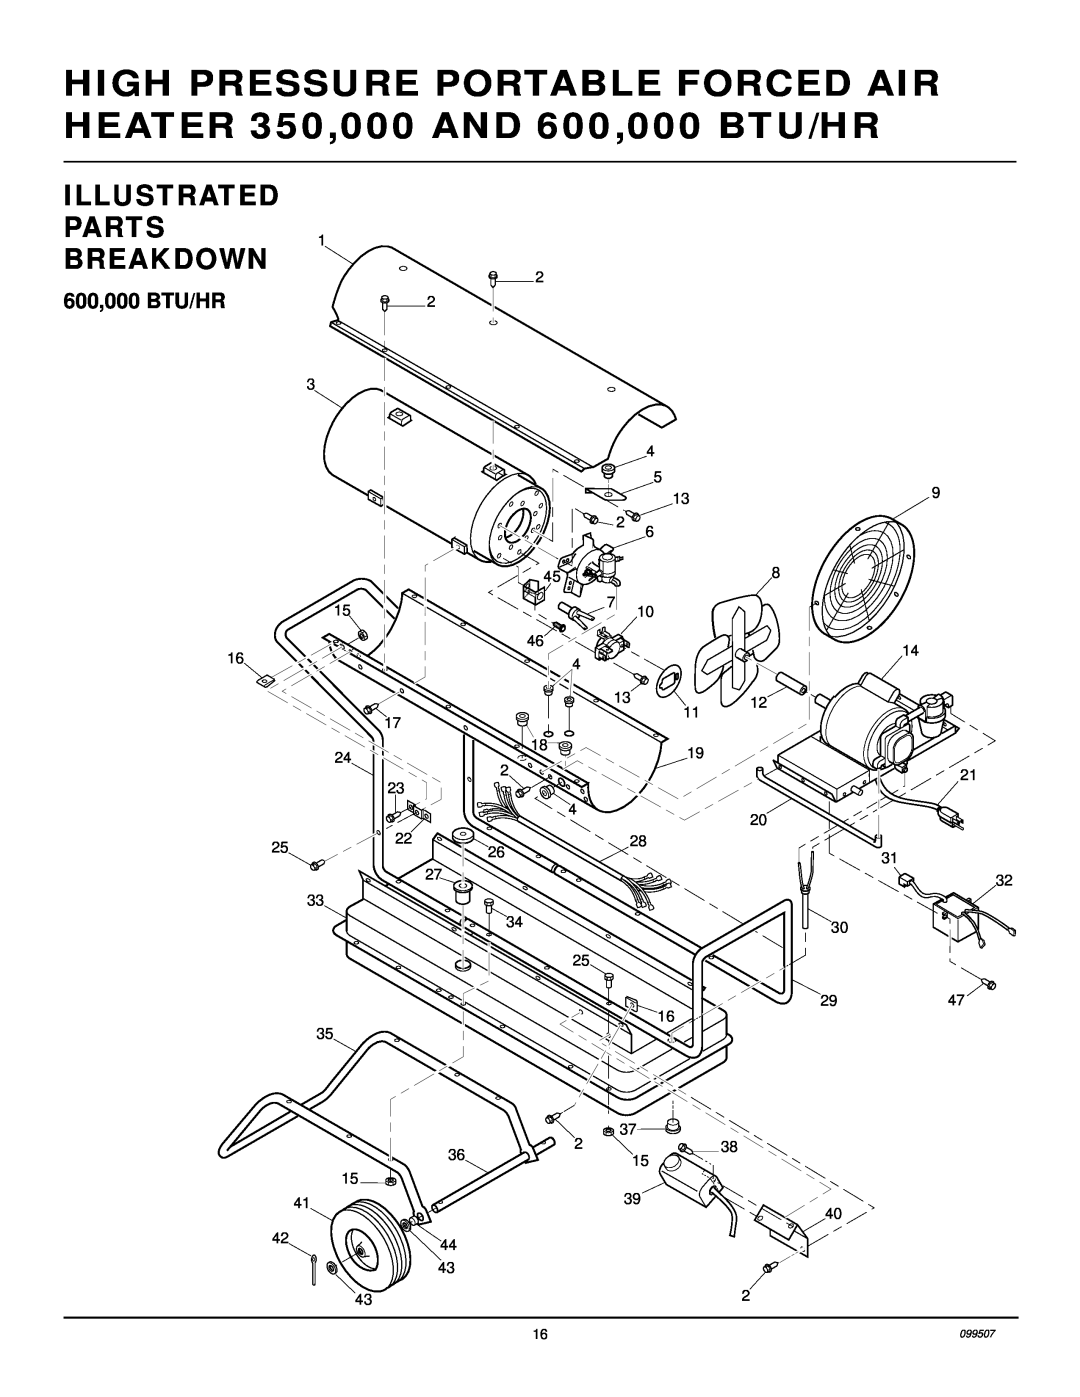 Desa B600D, B350D owner manual 600,000 BTU/HR, Illustrated Parts Breakdown 